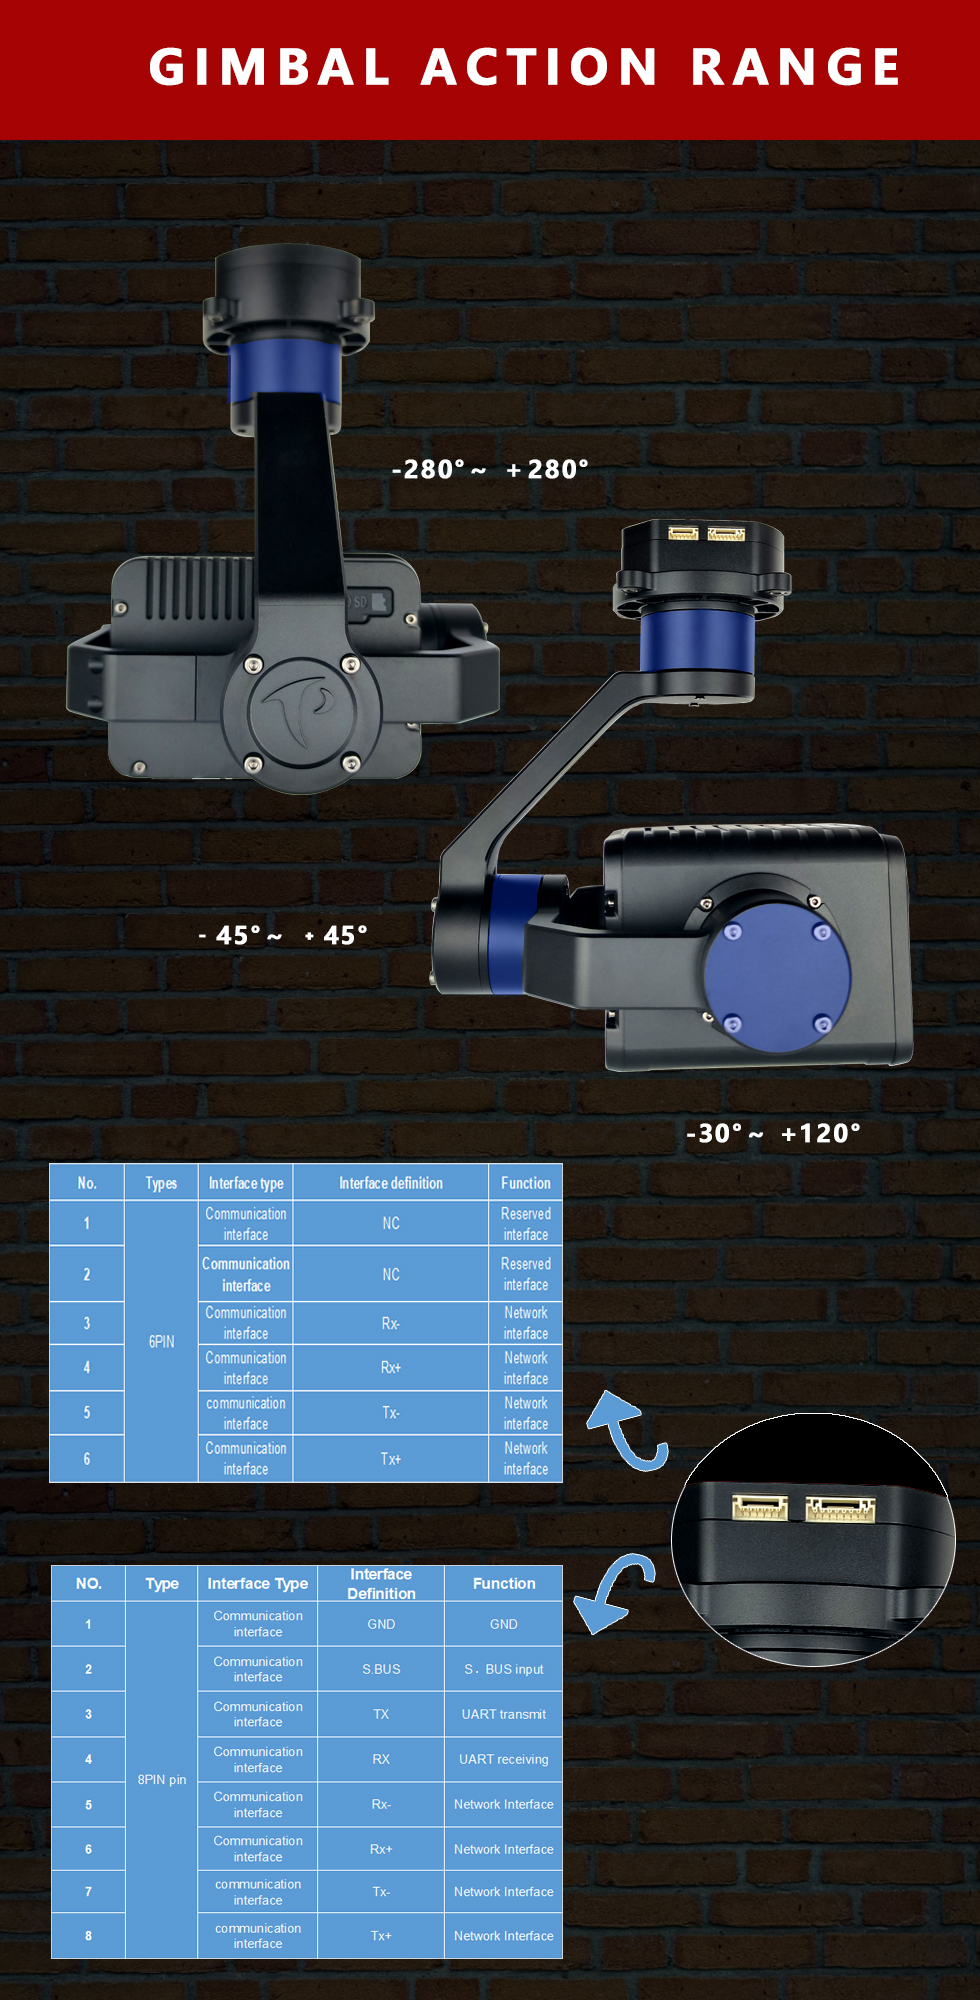 KHT30B  High performance four-sensor gimbal  30X optical zoom +Fixed-focus 1080P+640×512 IR thermal imaging +1800m laser range finder